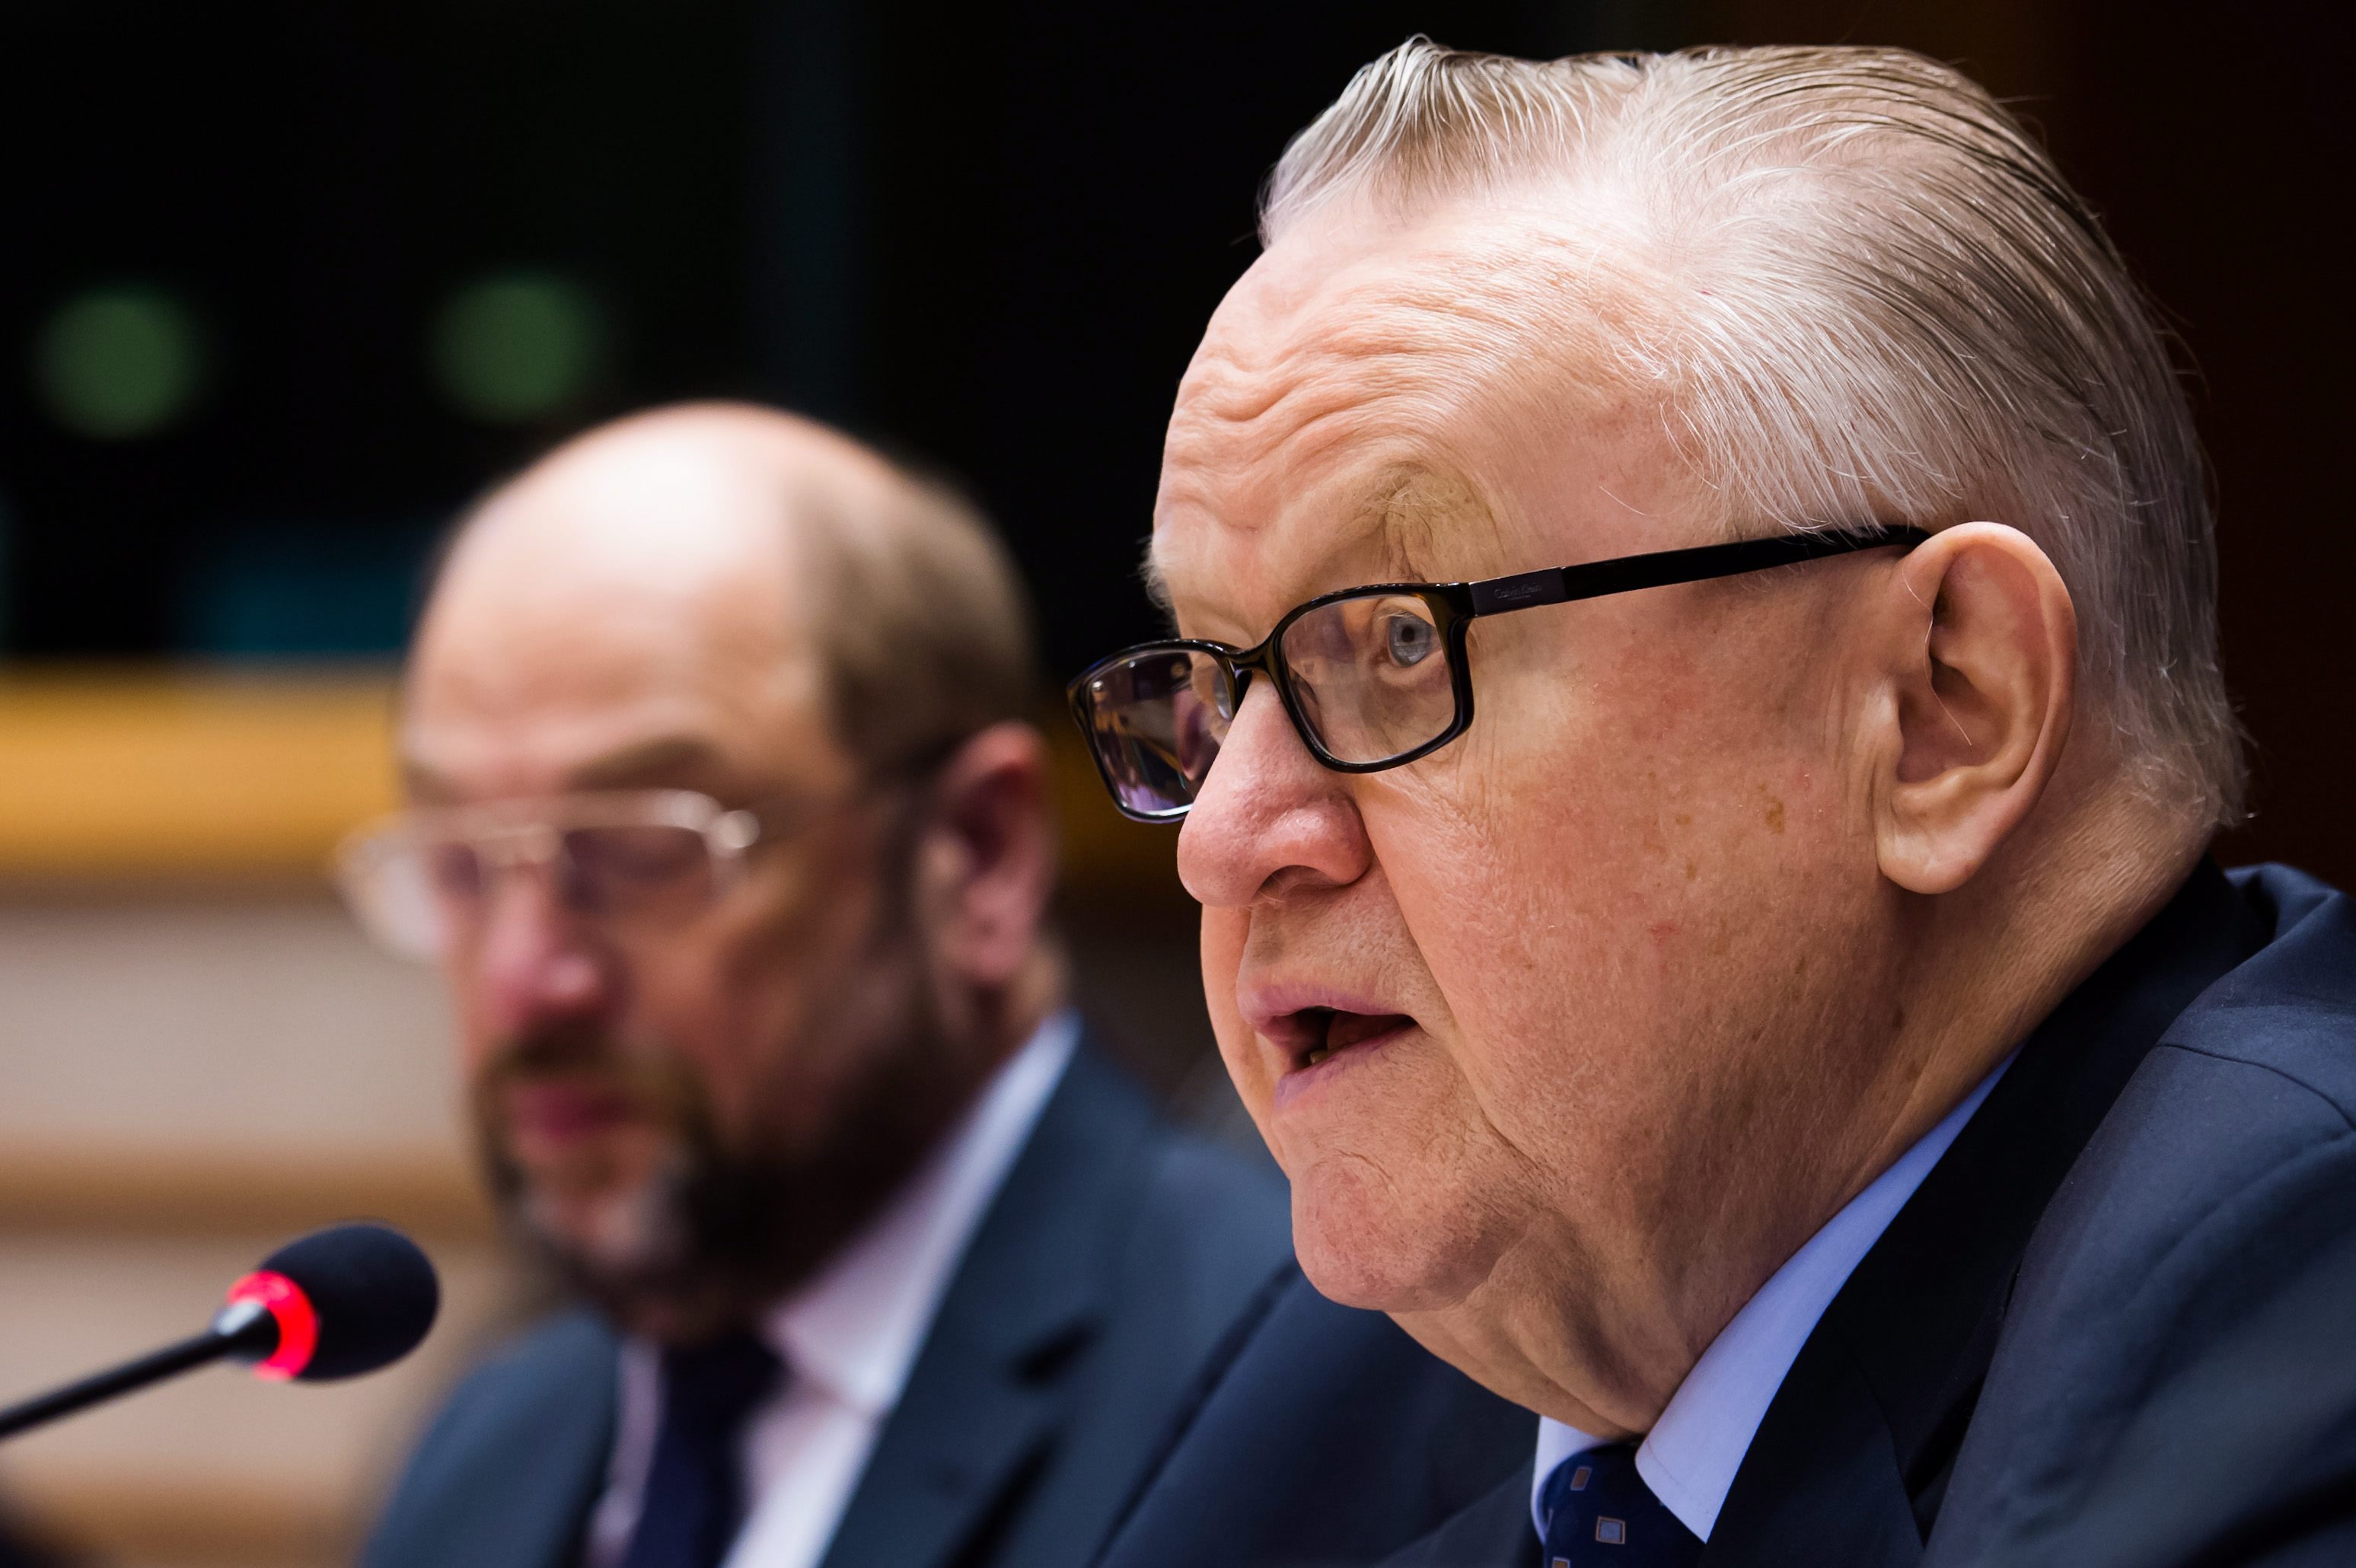 Former Finnish President Martti Ahtisaari at the European parliament in Brussels, Wednesday April 25, 2012. (Geert Vanden Wijngaert / AP)